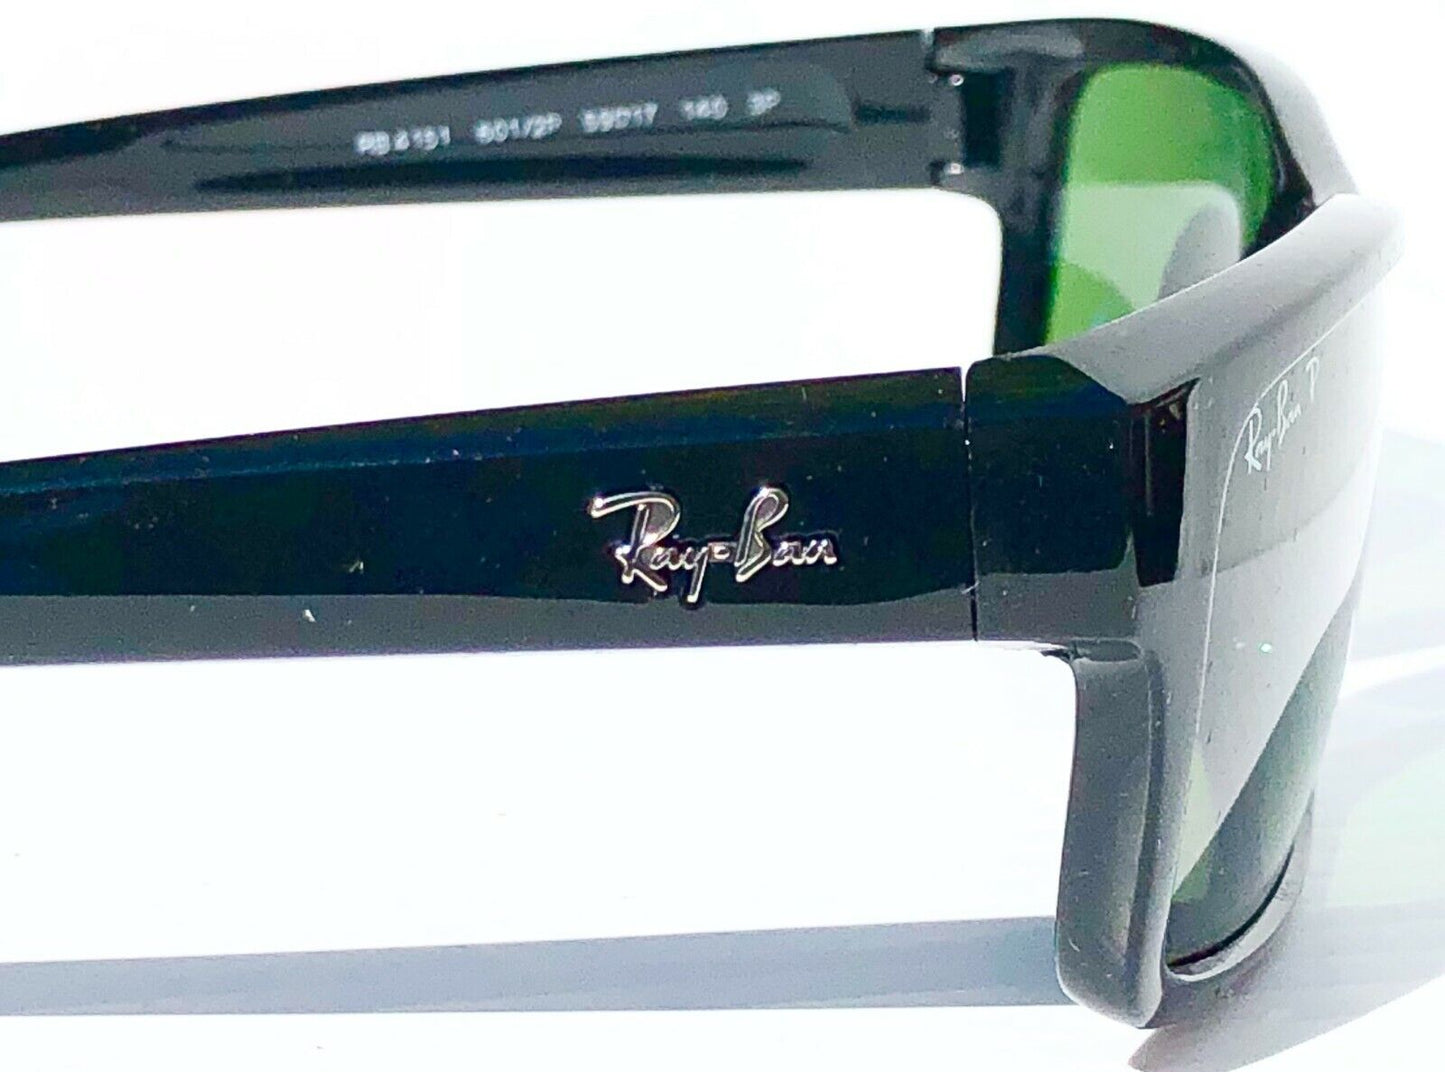 Ray Ban Polished Black Frame POLARIZED Green Lens Sunglass RB 4151 601/2P